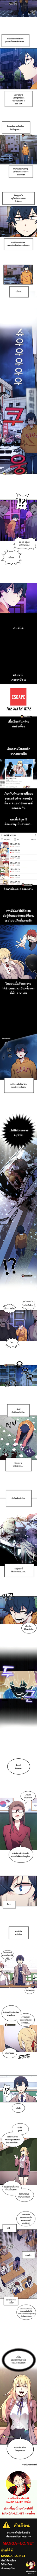 Webtoon Character Na Kang Lim ร ยธโ€ขร ยธยญร ยธโขร ยธโ€”ร ยธยตร ยนห 1 (4)